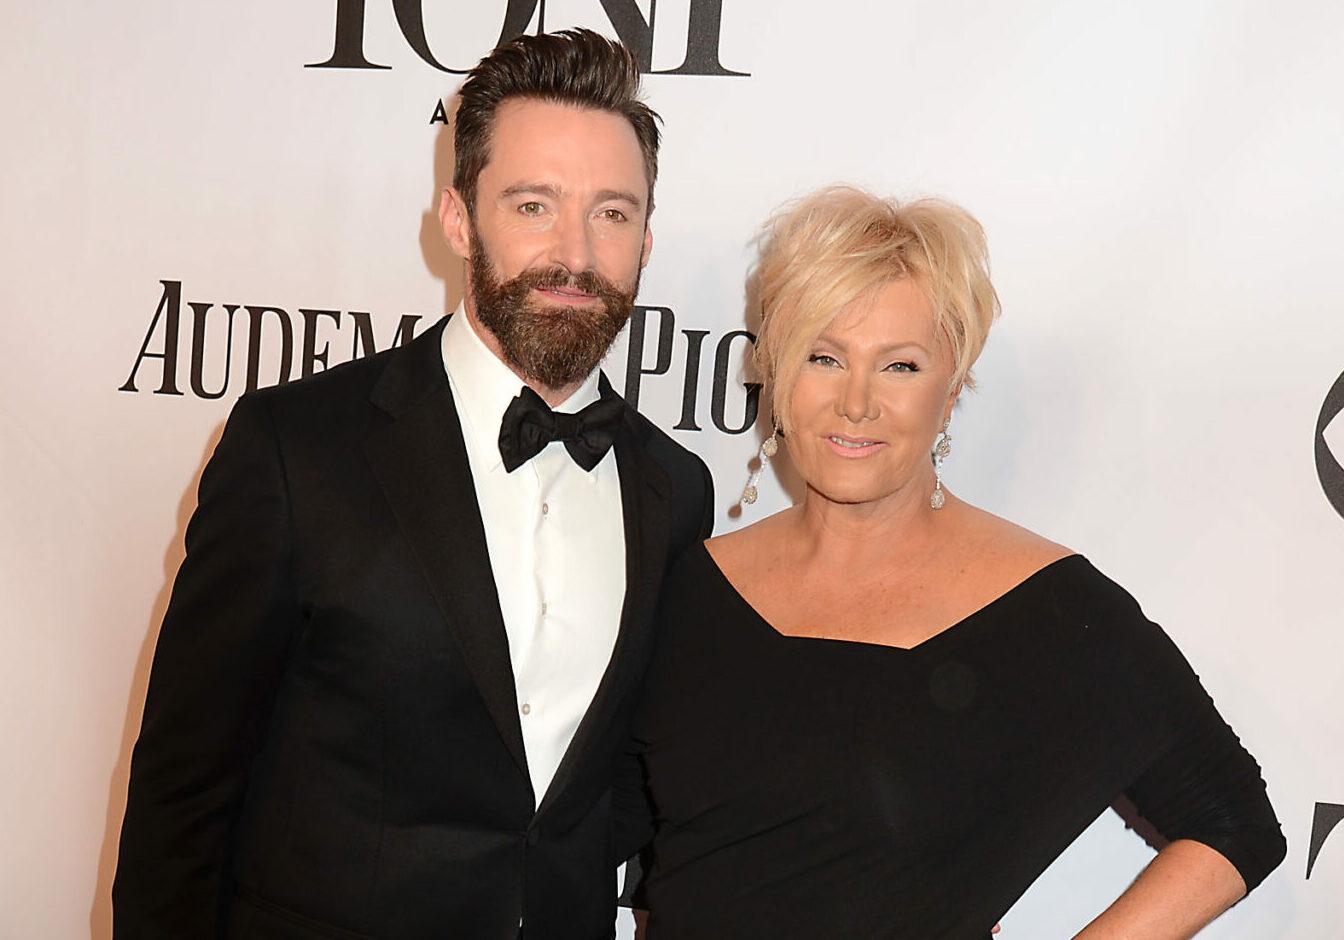 Hugh Jackman and wife Deborah-Lee Furness arrive at the 68th Annual Tony Awards